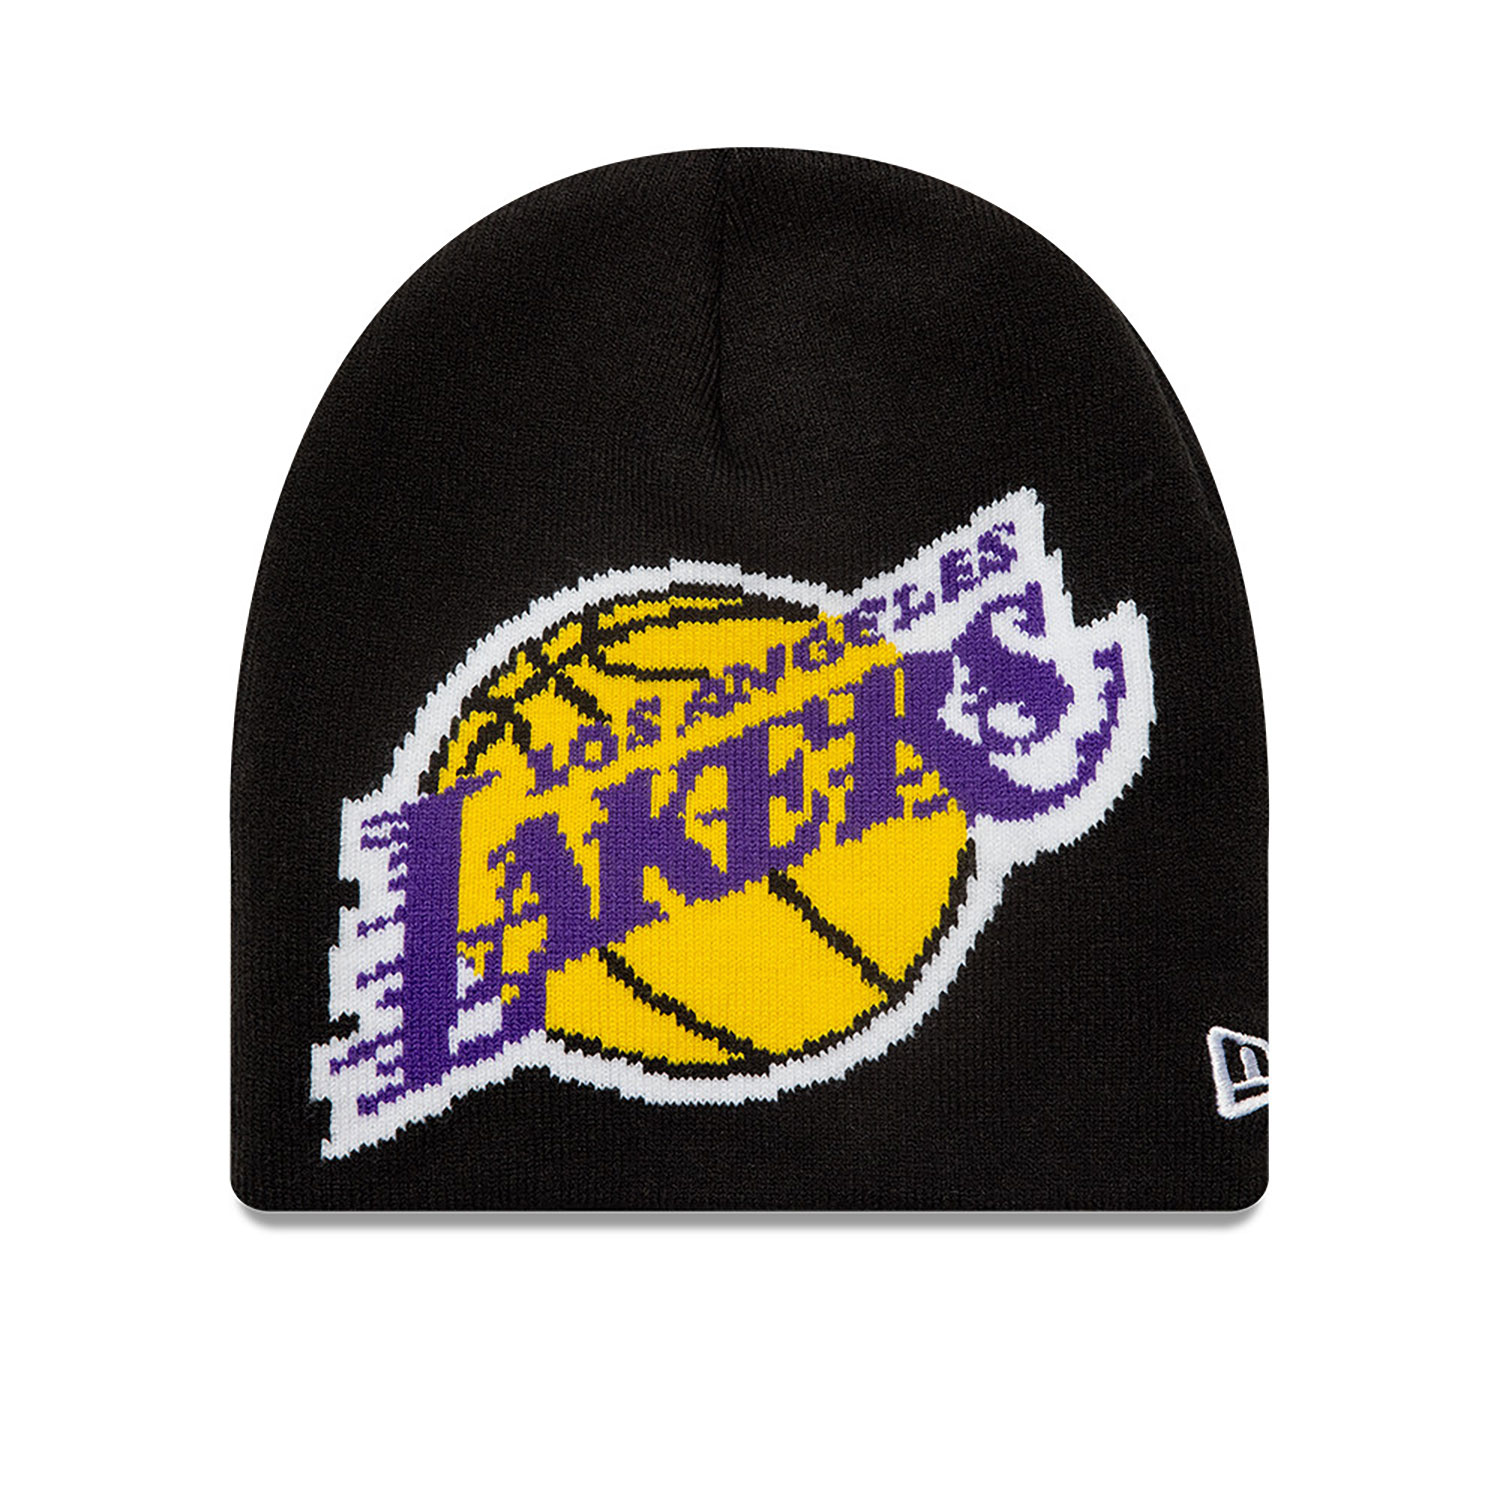 LA Lakers NBA Black Skull Knit Beanie Hat